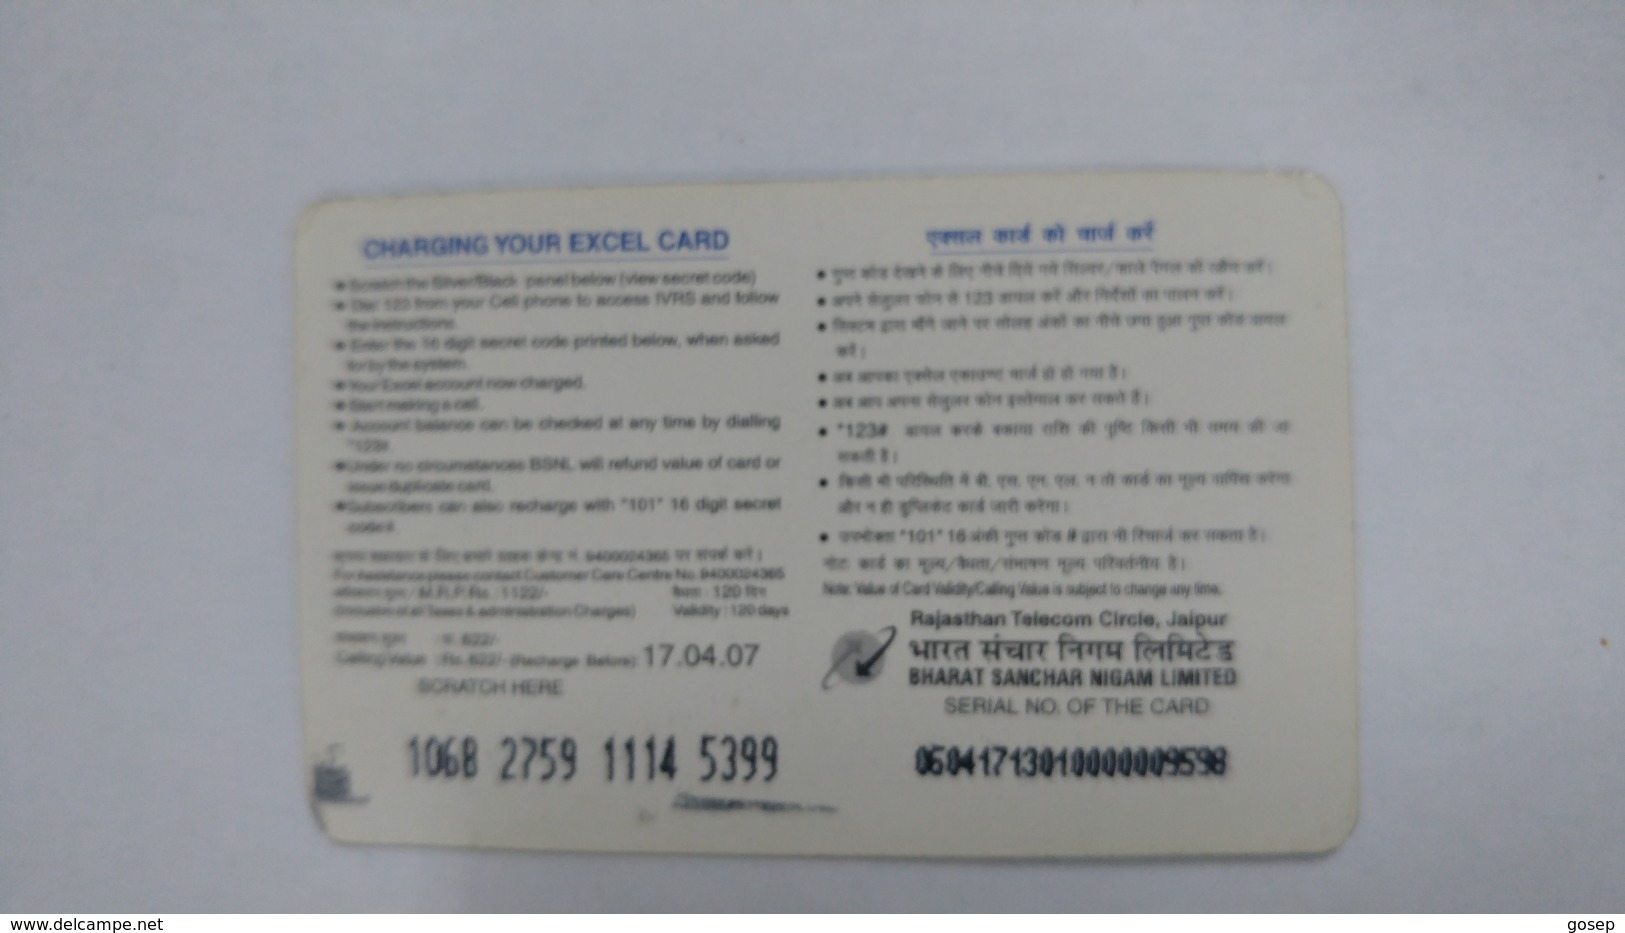 India-ex-cel-recharge Card-(31c)-(rs.1000)-(17.4.2007)-(jaipur)-card Used+1 Card Prepiad Free - India